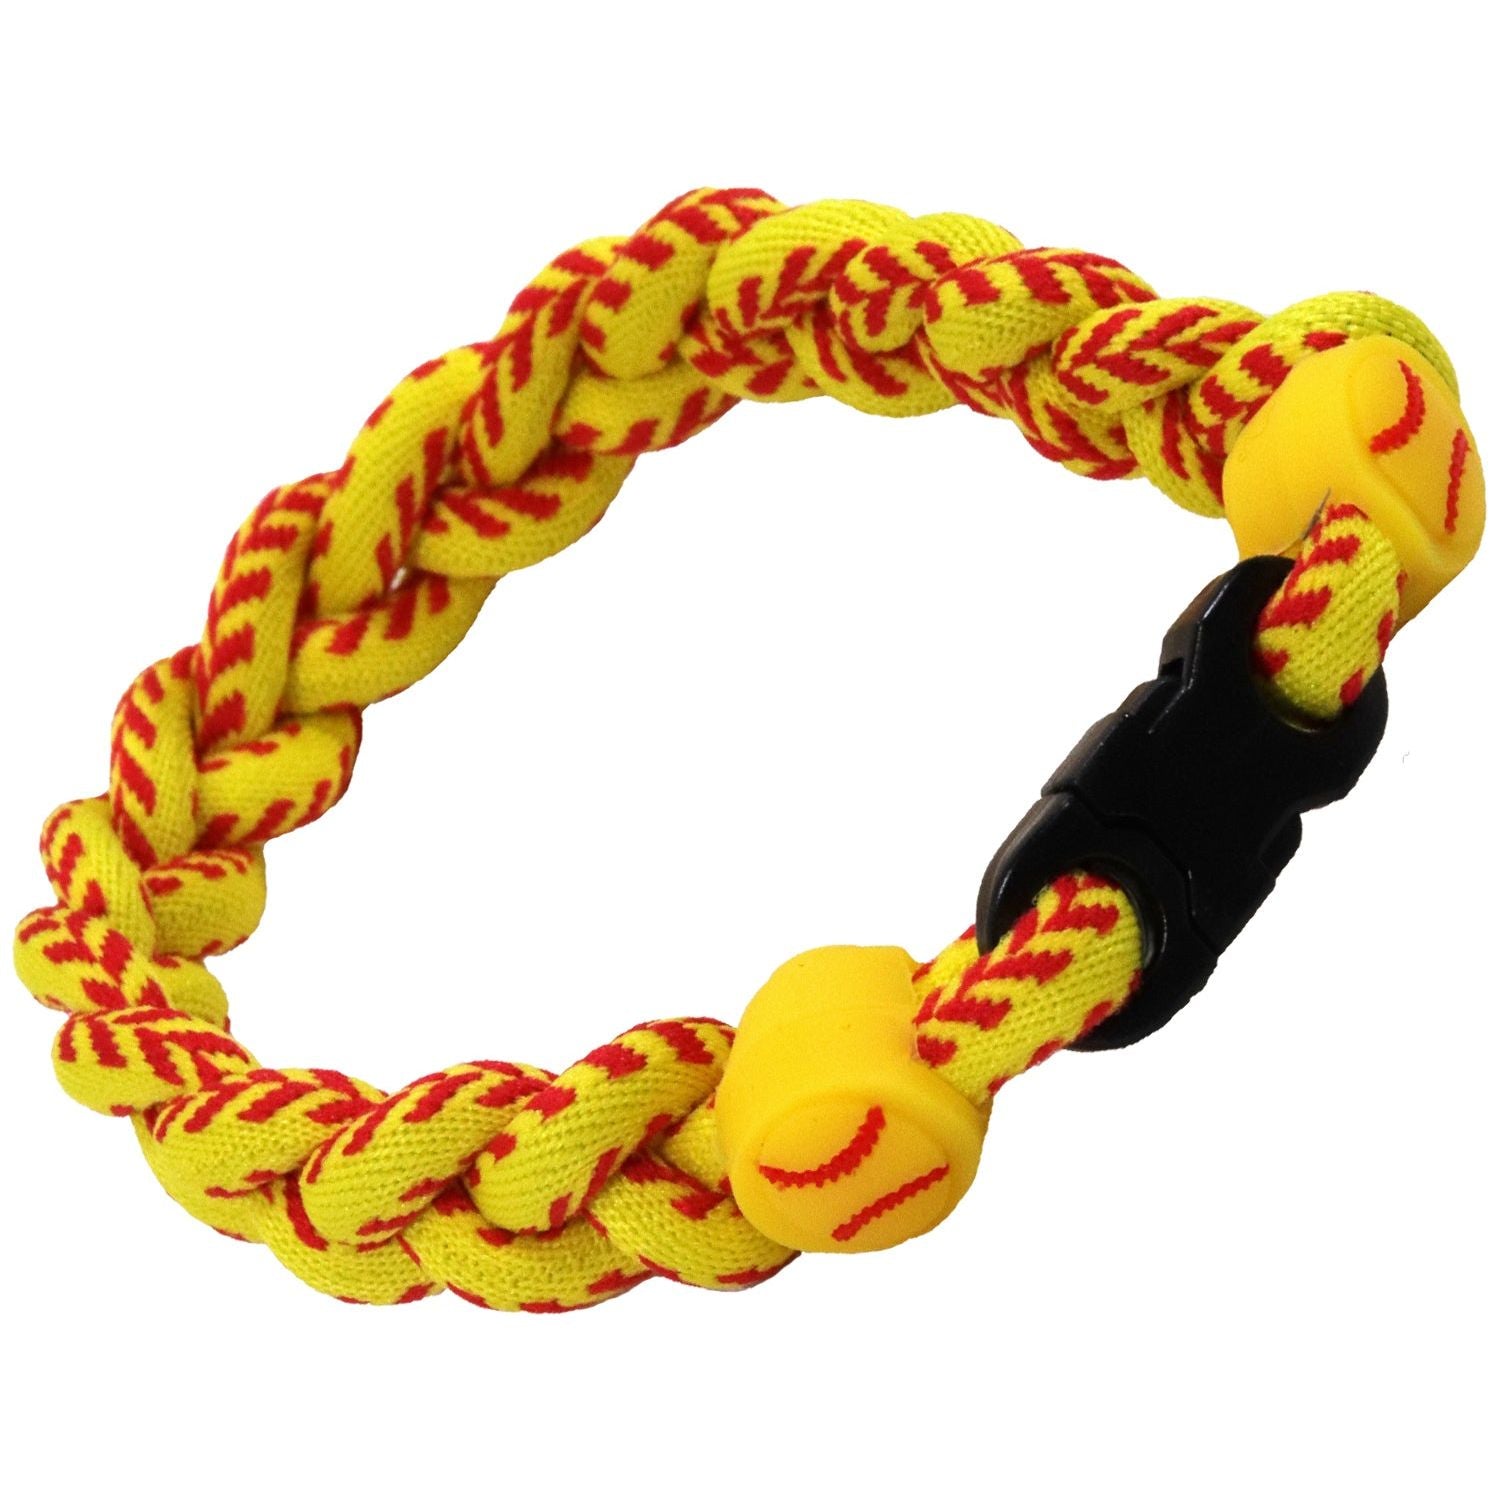 CyanOak Softball Motivational Bracelets Inspirational Rubber Wristbands 